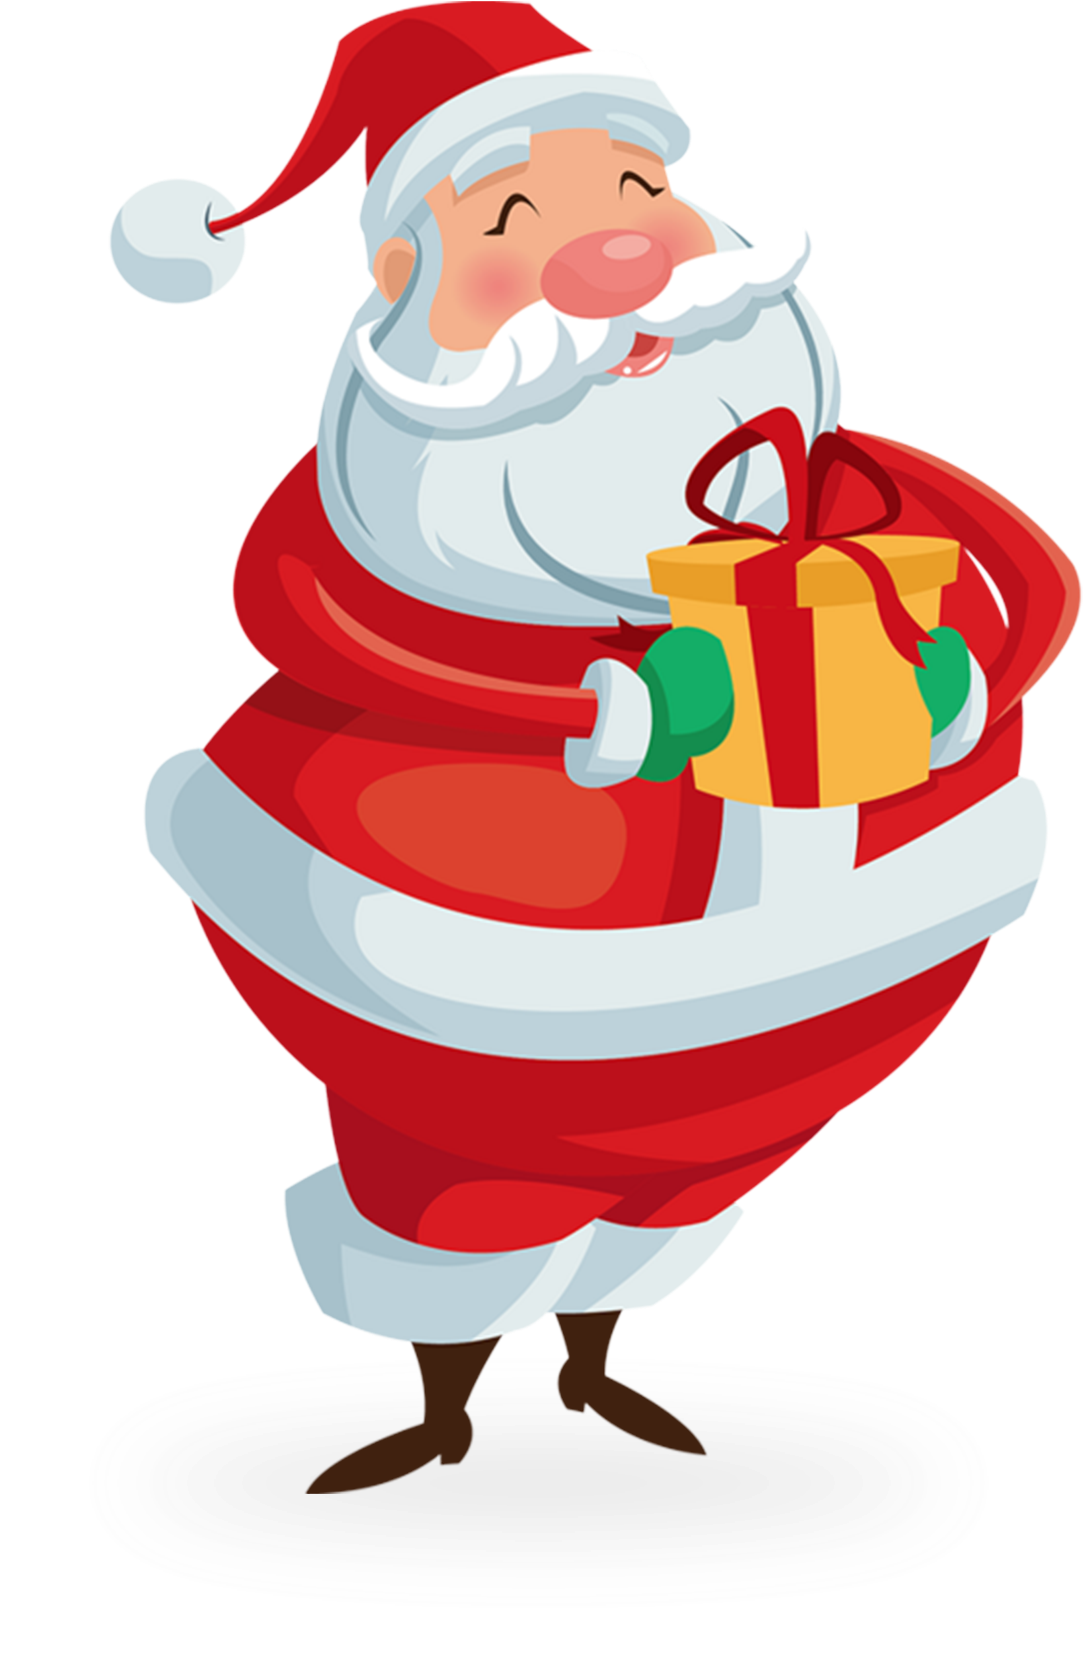 Cheerful Santa Clauswith Gift Illustration